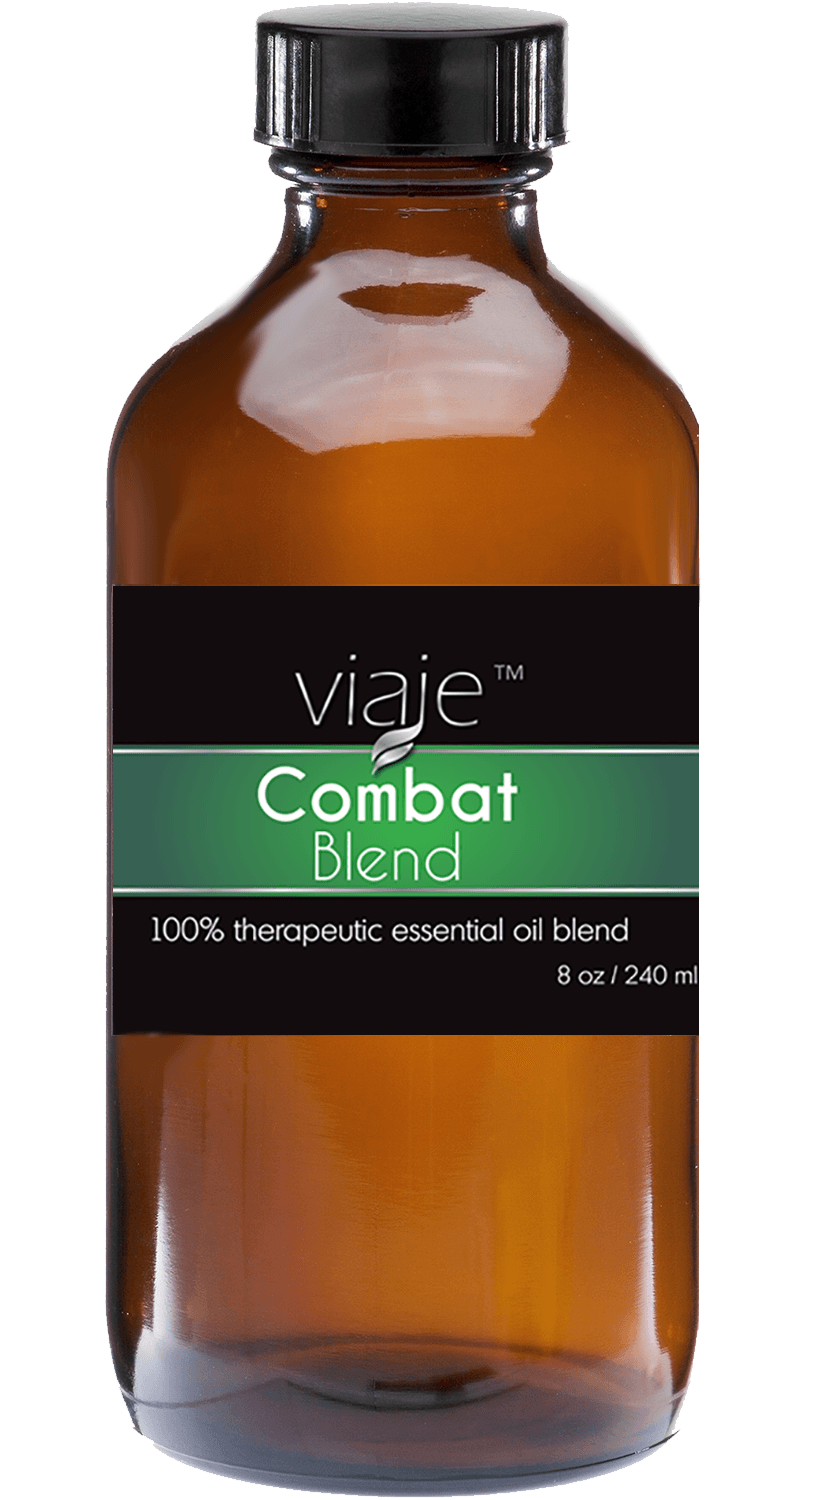 VIAJE™ COMBAT BLEND Pure Essential Oil 8 OZ